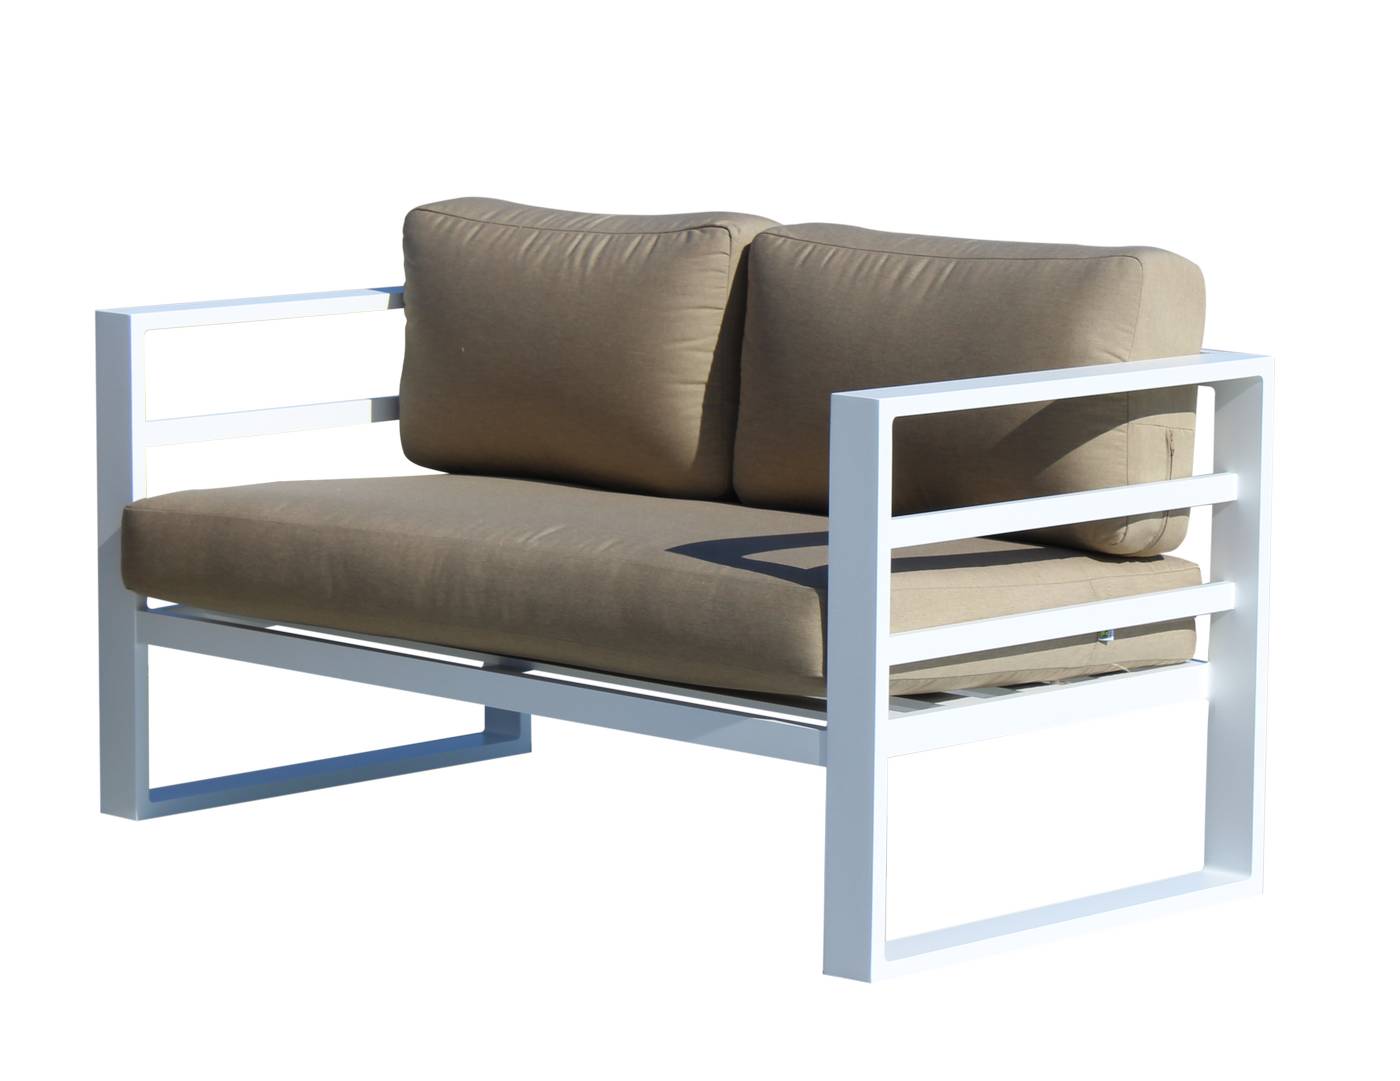 Set Aluminio Dalas-9 - Conjunto de aluminio para jardín o terraza: sofá 2 plazas + 2 sillones + mesa de centro + 2 taburetes. Disponible en color blanco o antracita.